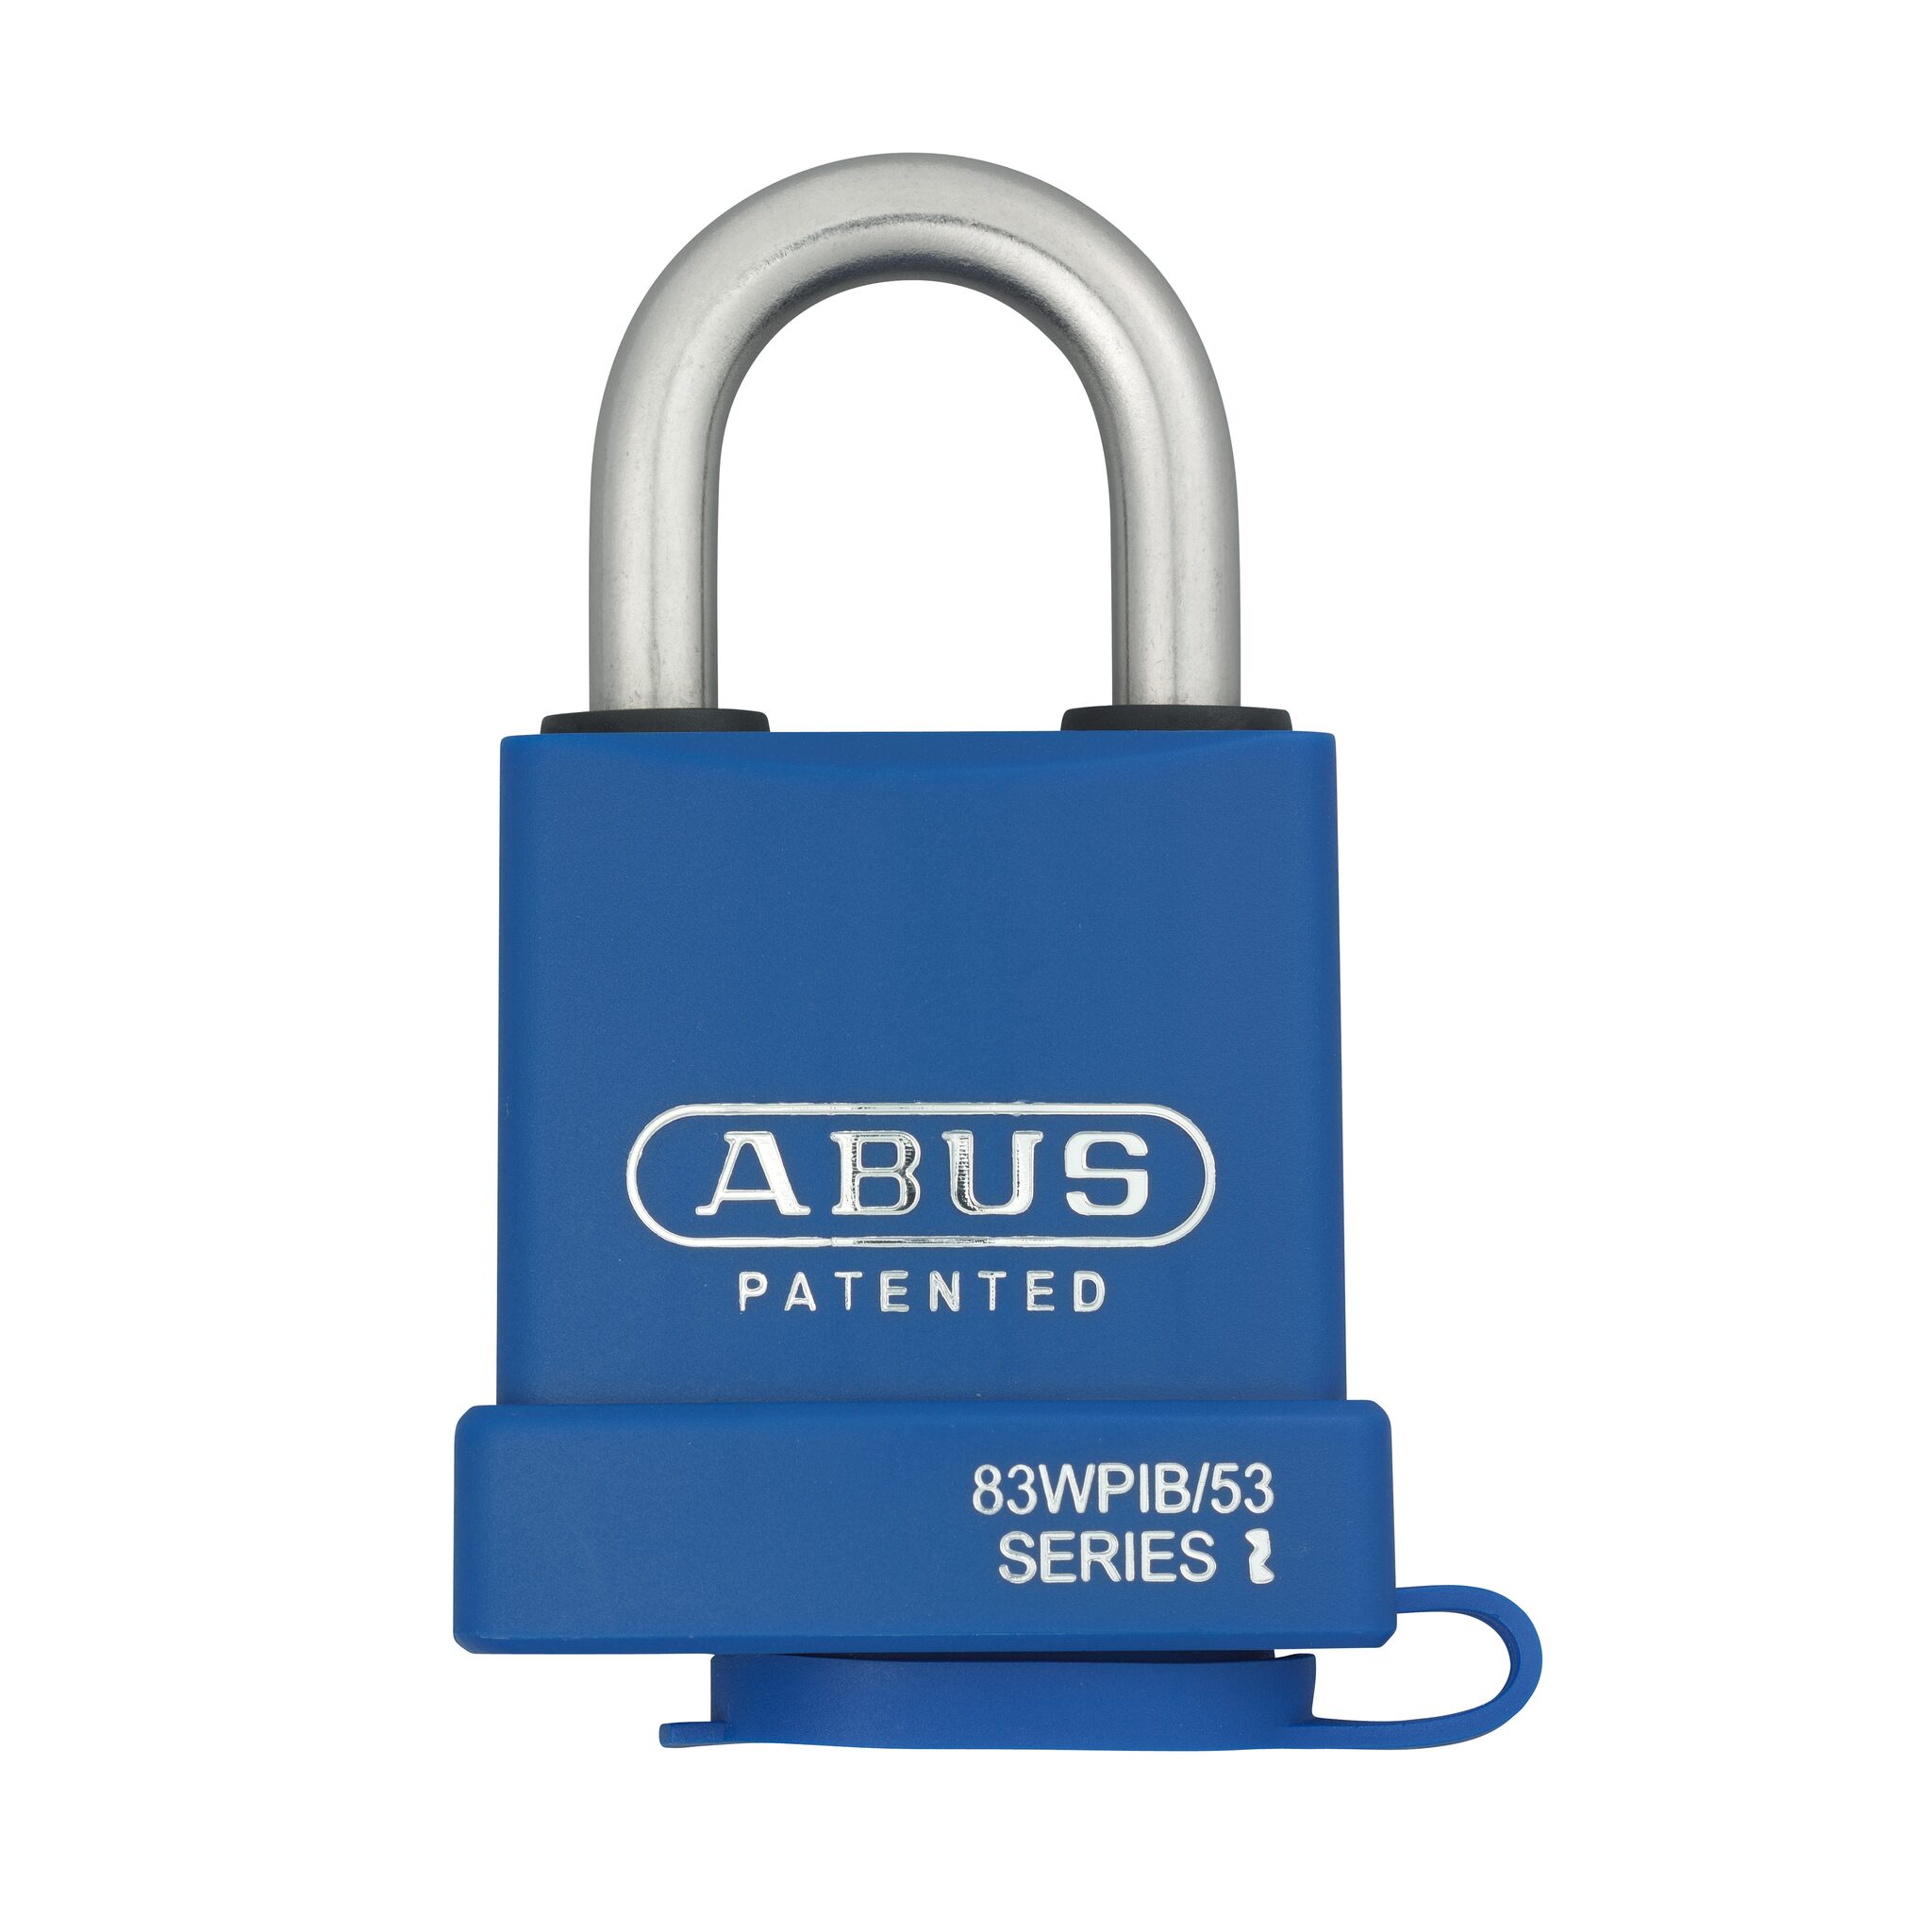 ABUS padlock 83WPIB/53